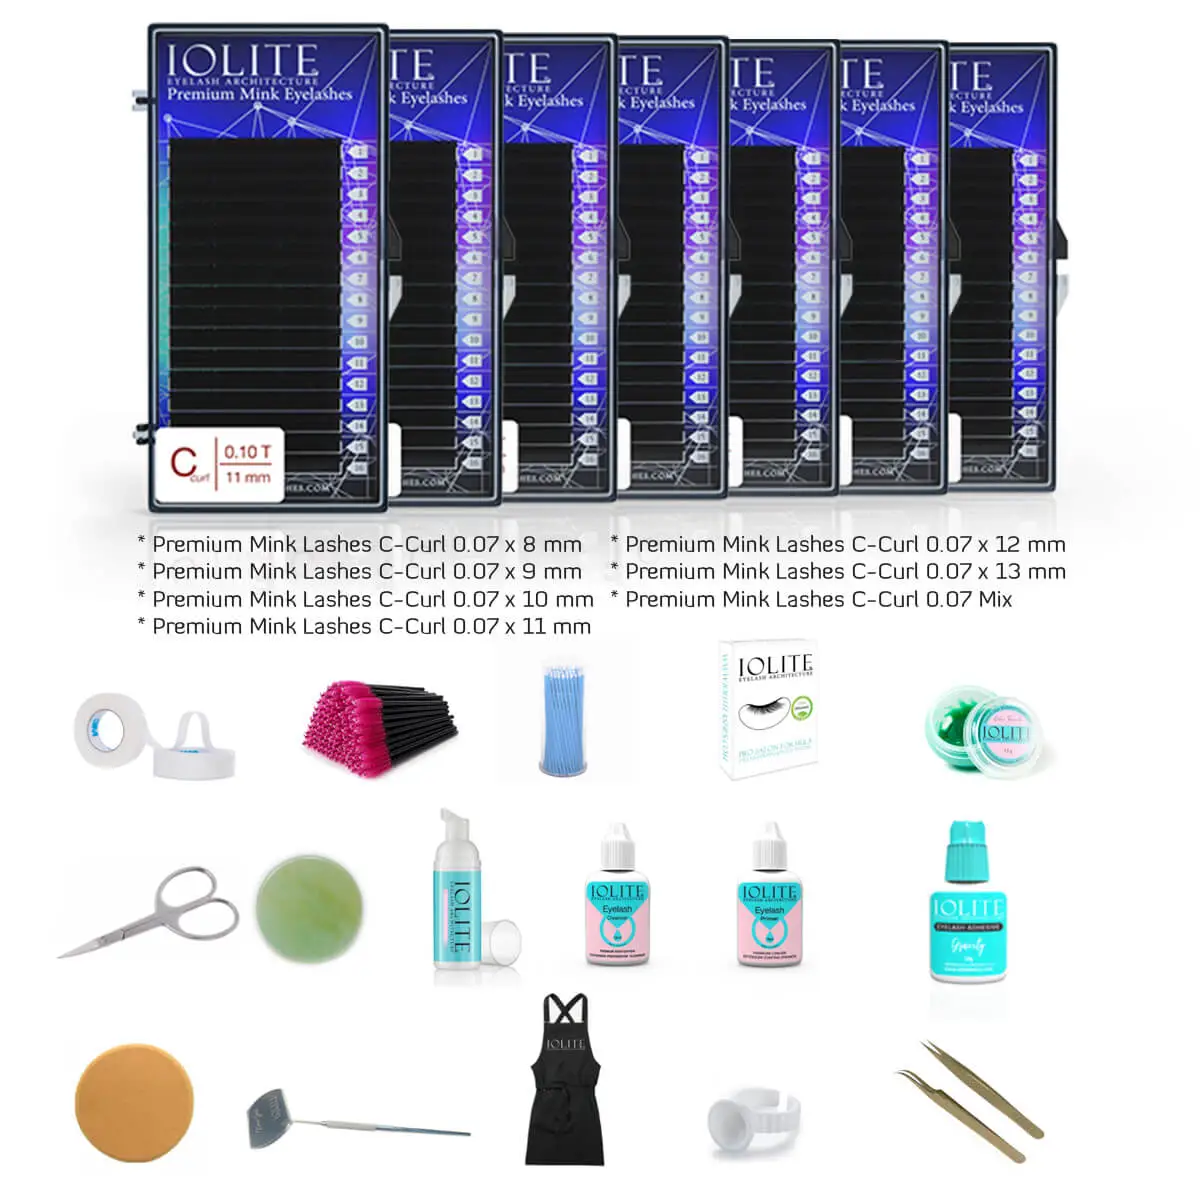 Iolite-Eyelash-Extension-Professional-Kit-2